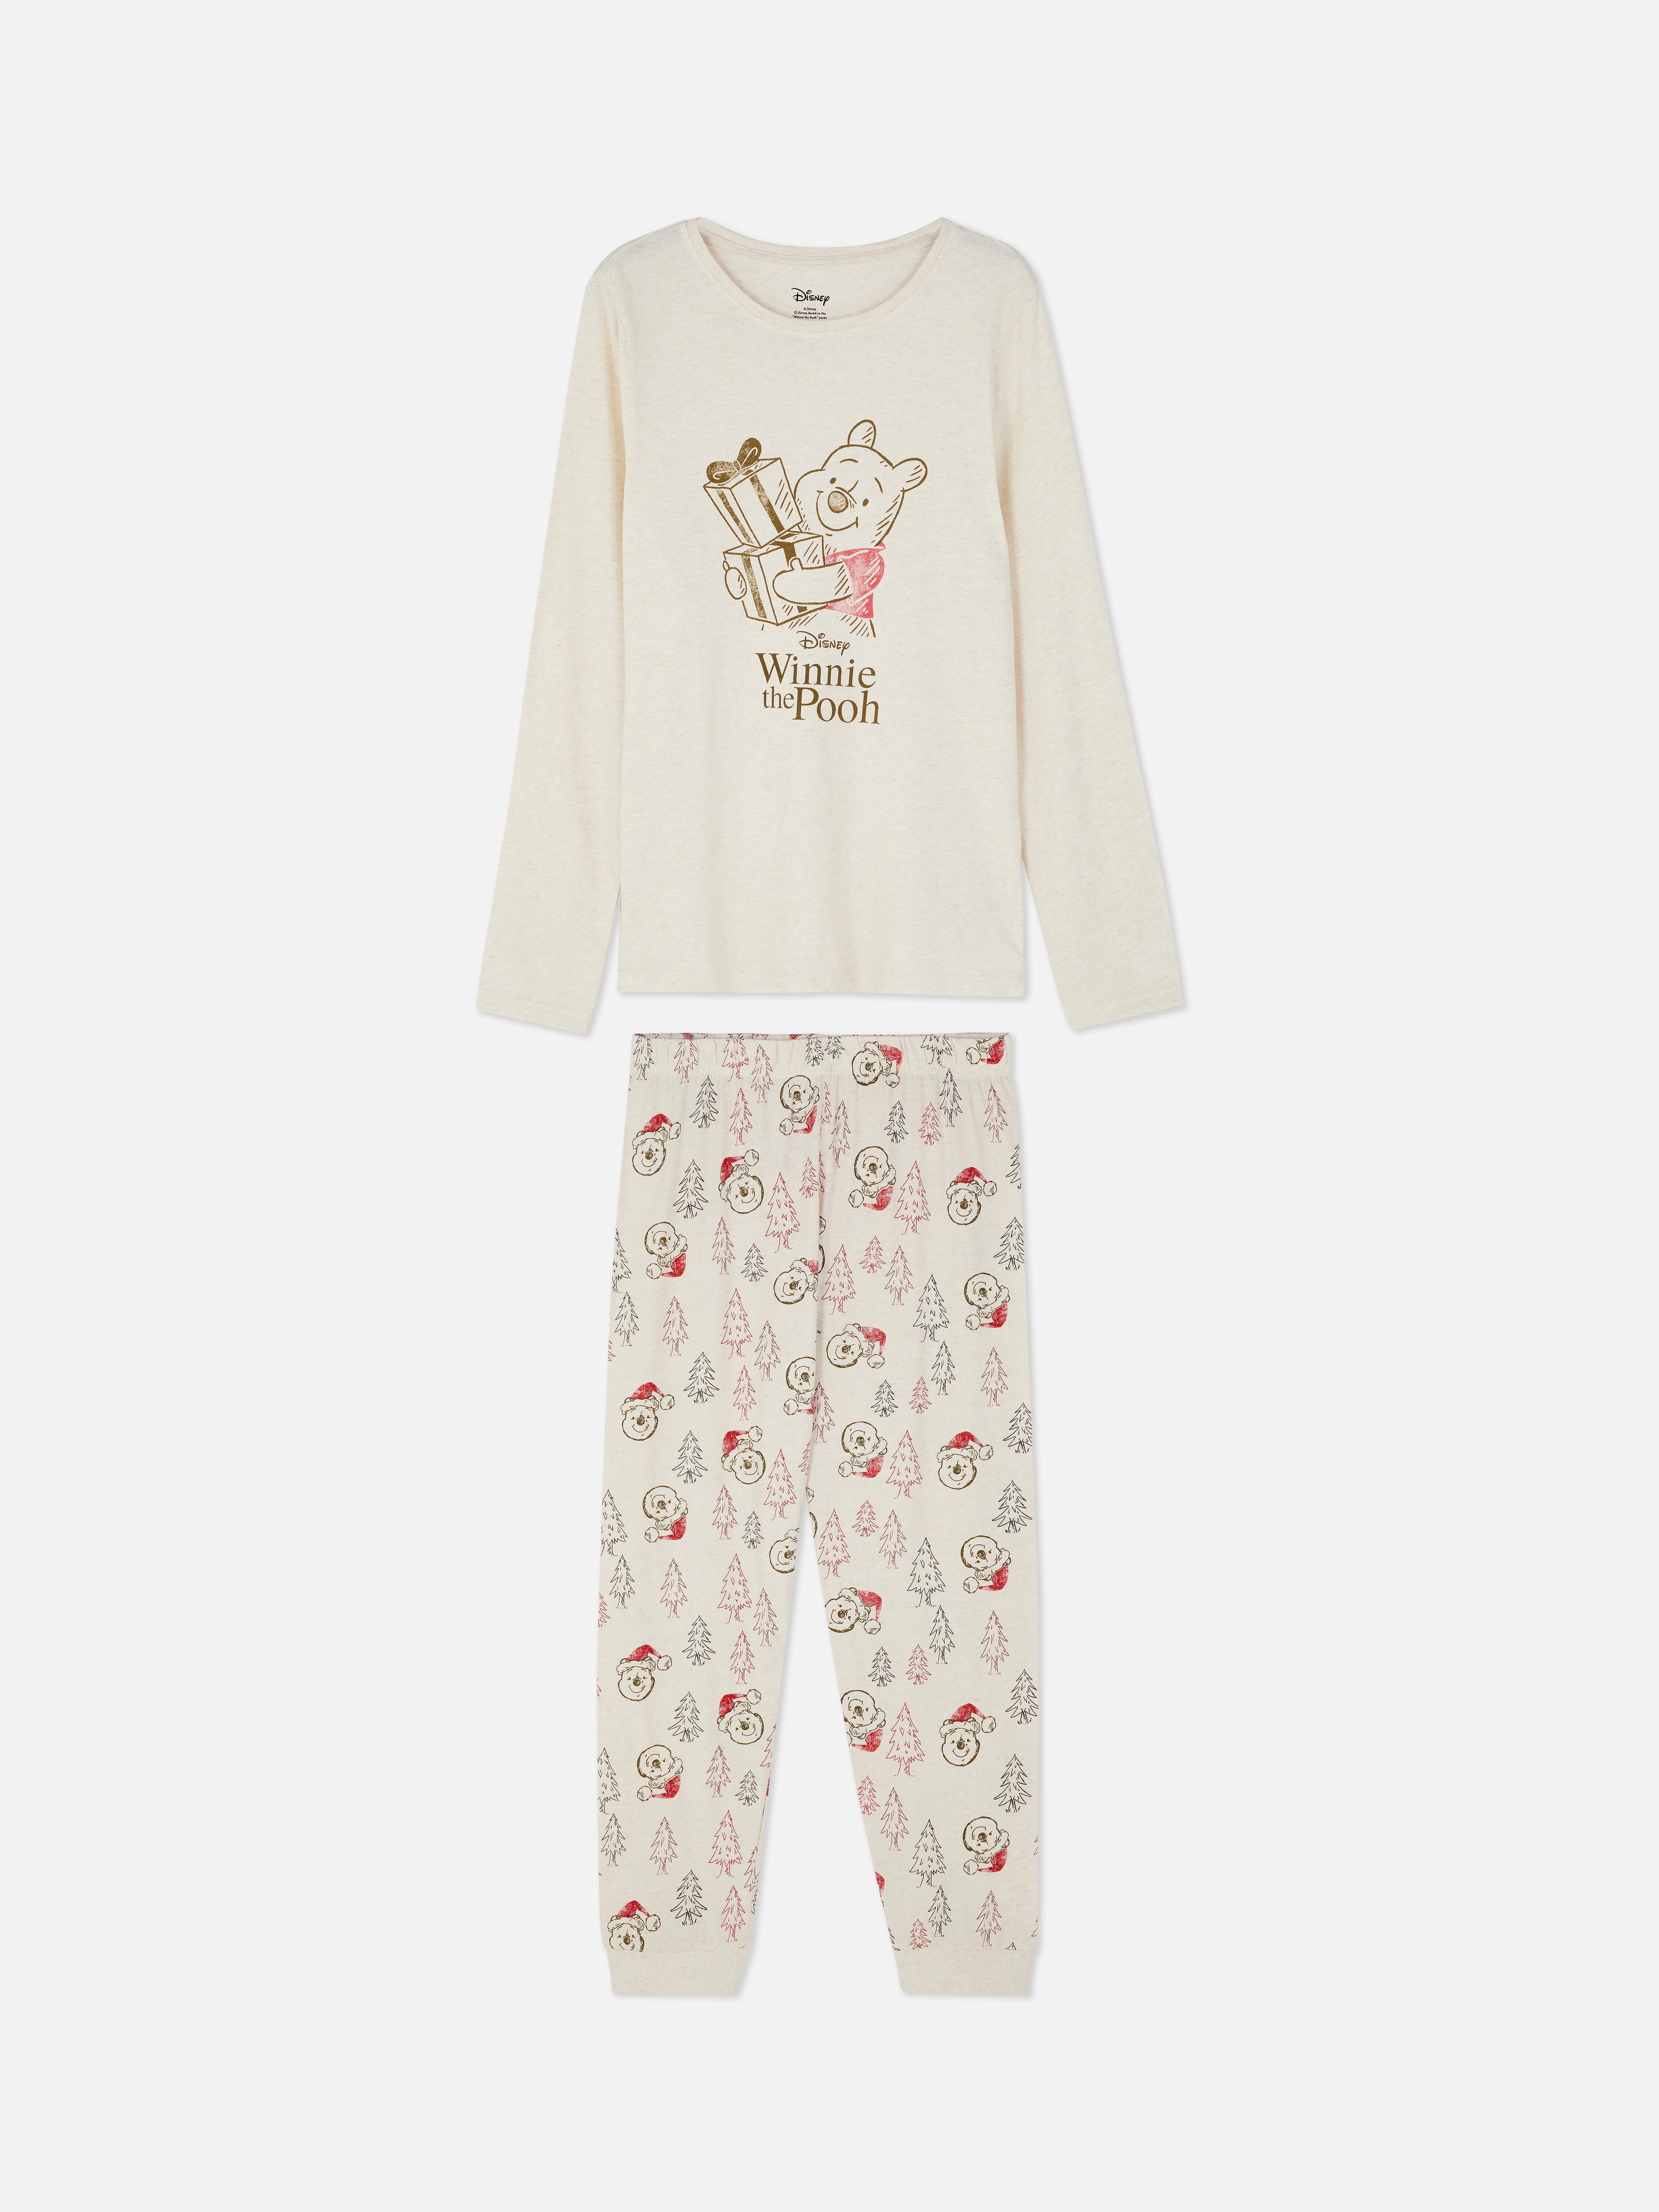 Disney's Christmas Pyjama Sets